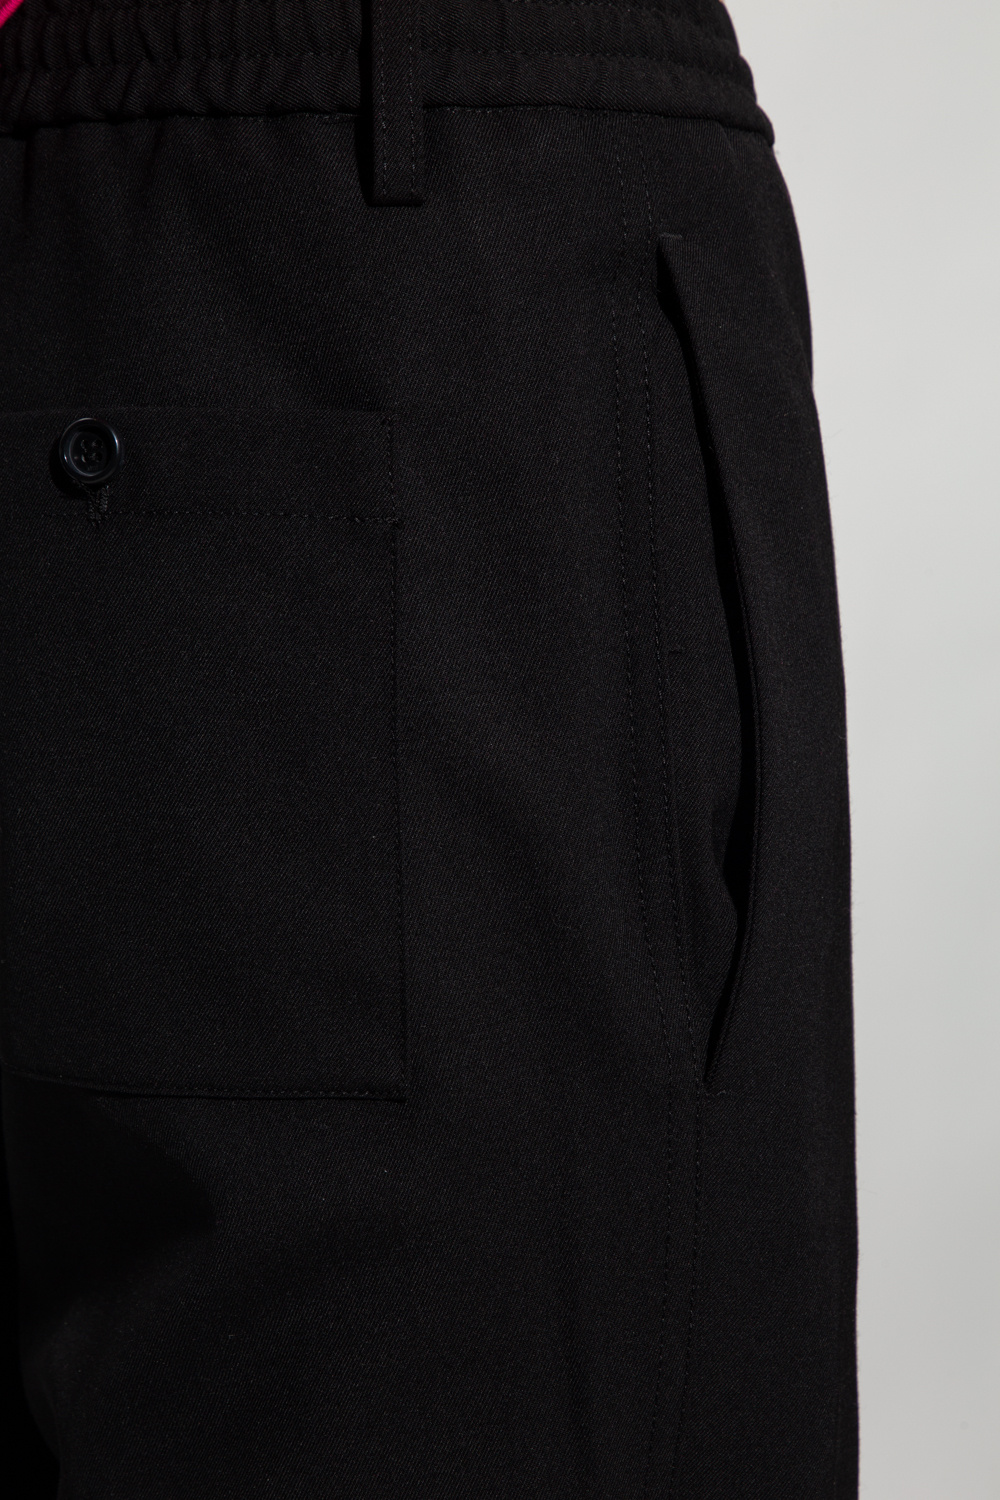 rhude oversize logo print shorts item Pleat-front trousers